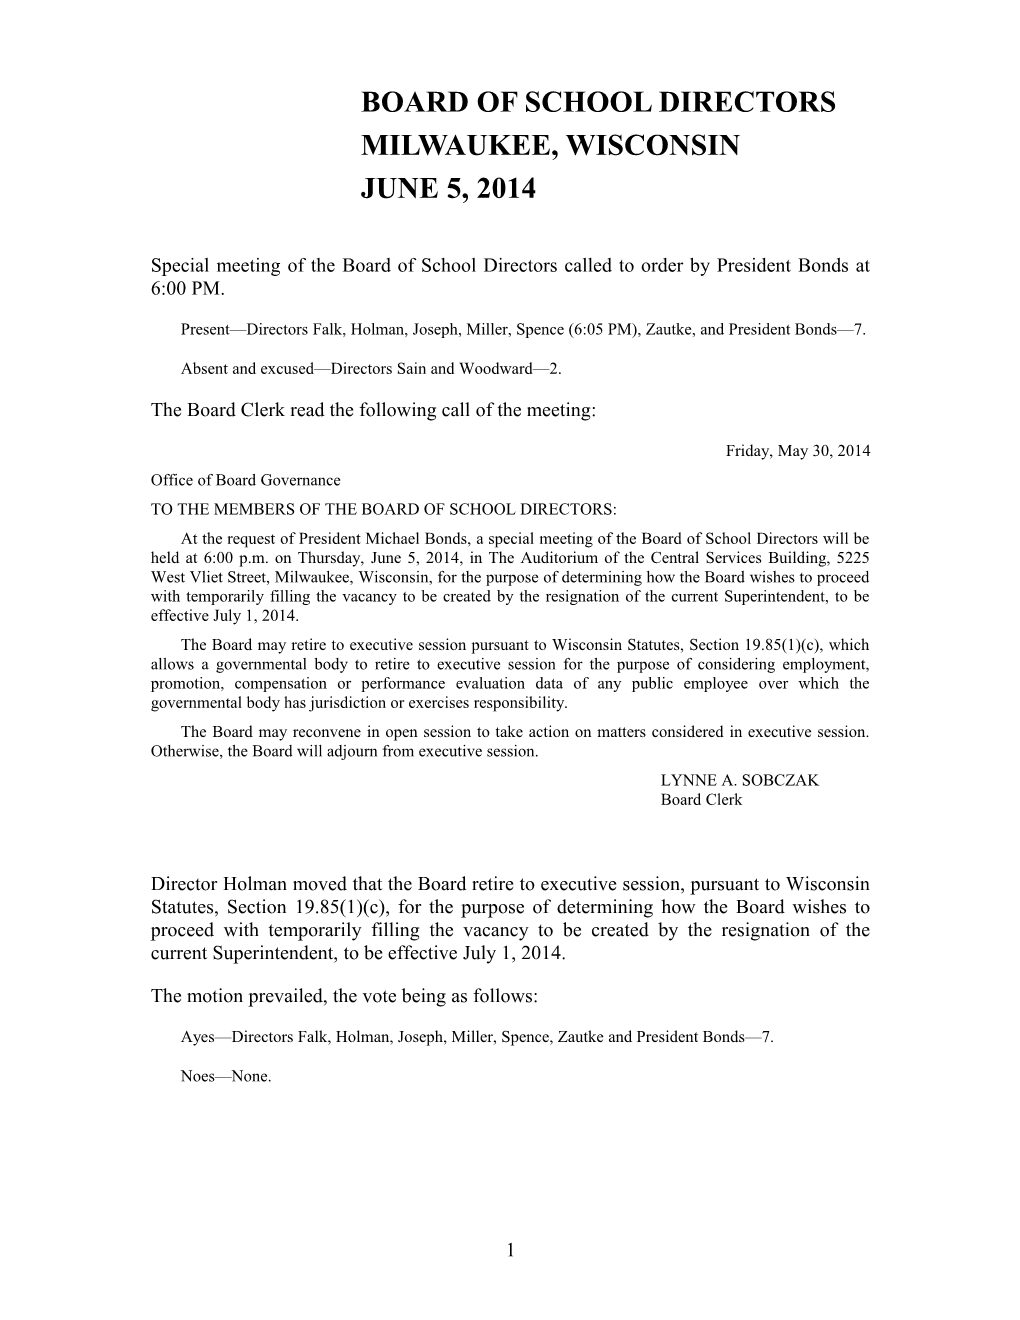 June 2014 Proceedings of the Milwaukee Board of School Directors